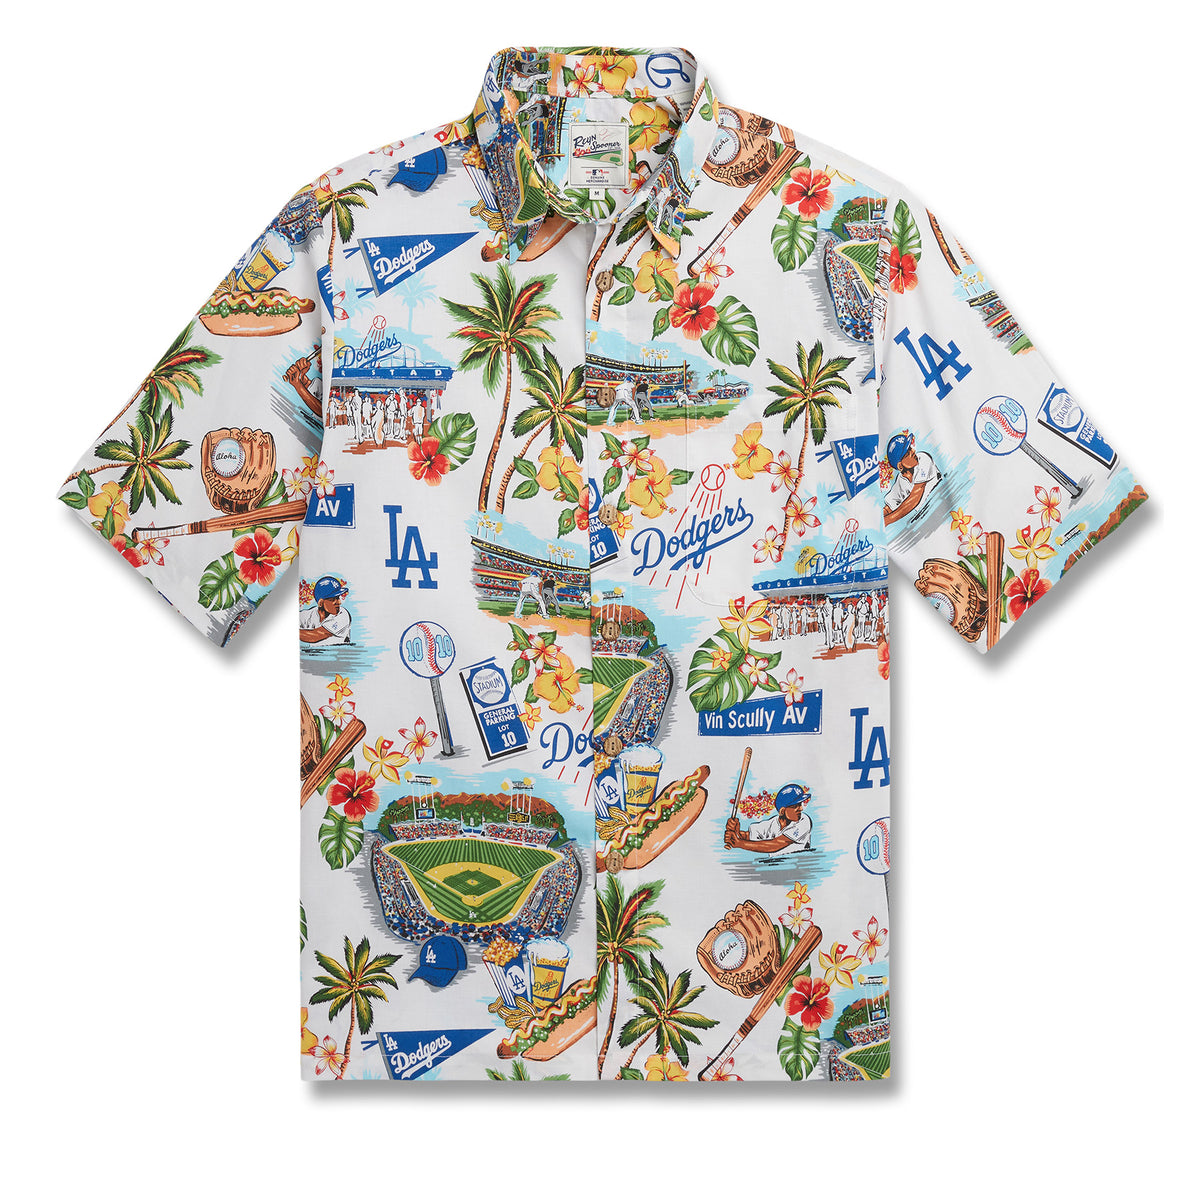 Official Men's Los Angeles Dodgers Gear, Mens Dodgers Apparel, Guys Clothes